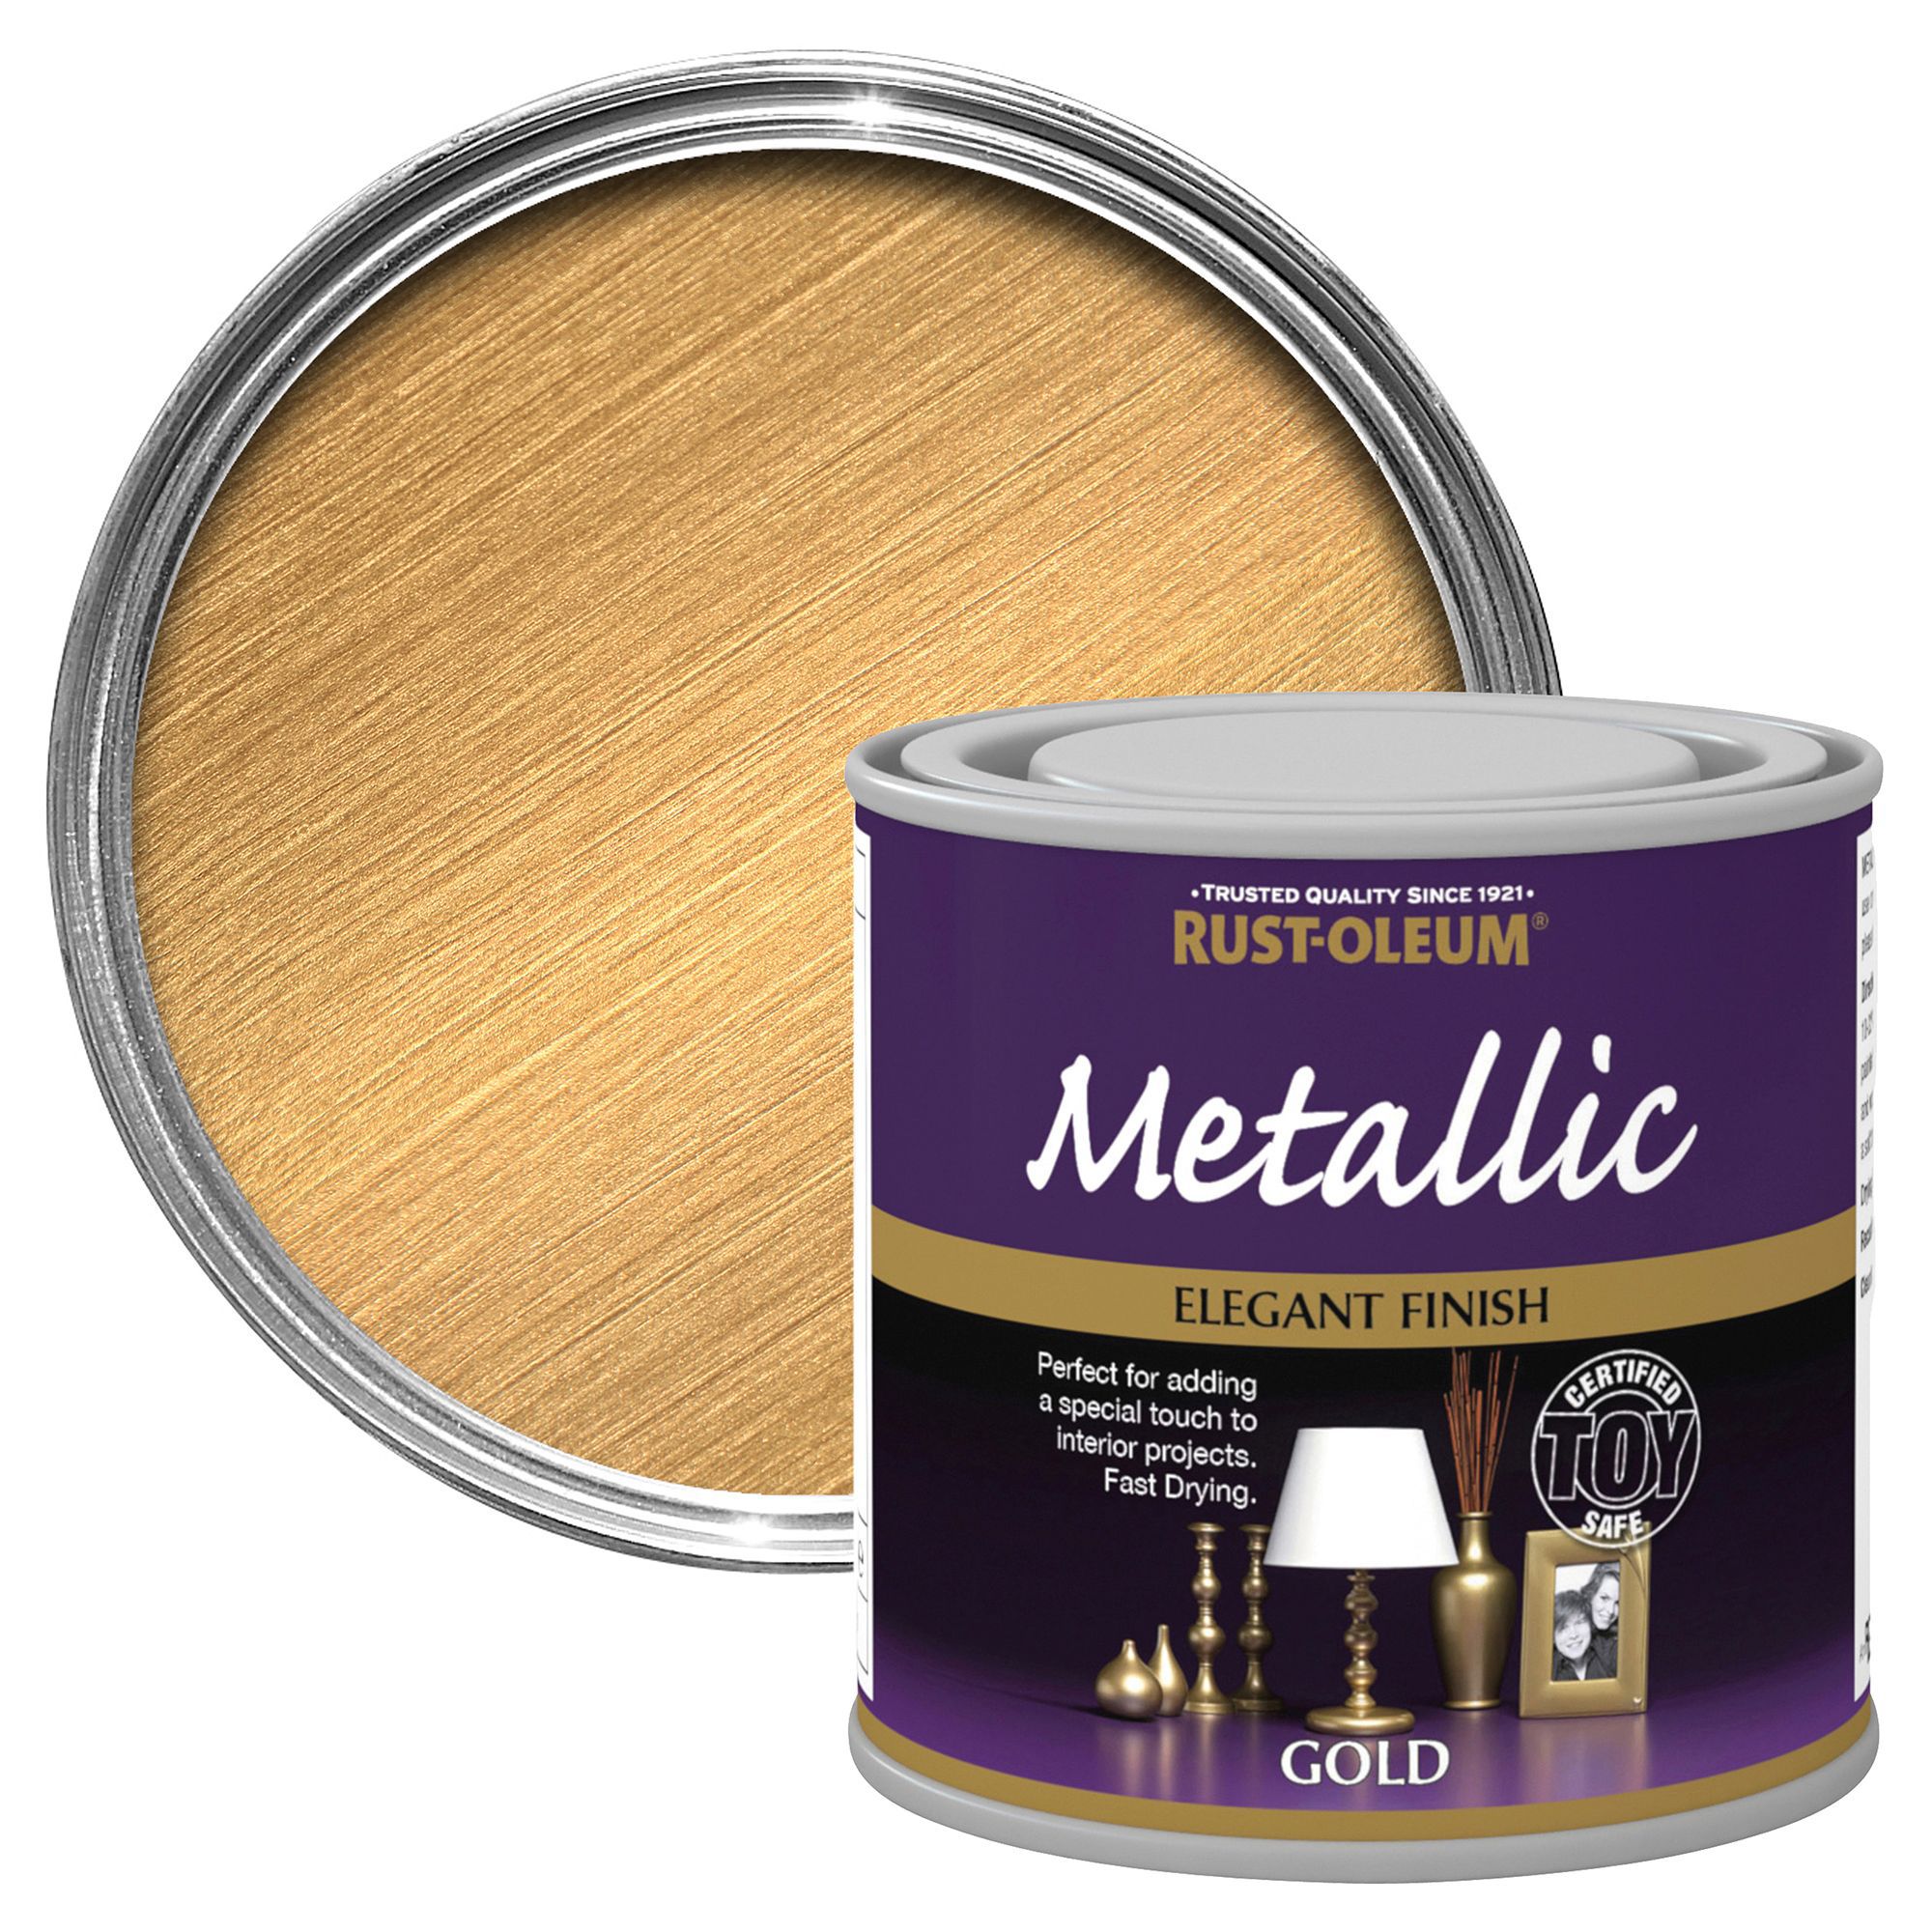 Gold Metallic Paint Wood Furniture  Rose Gold Spray Paint Wood - 100g Gold  Paint - Aliexpress